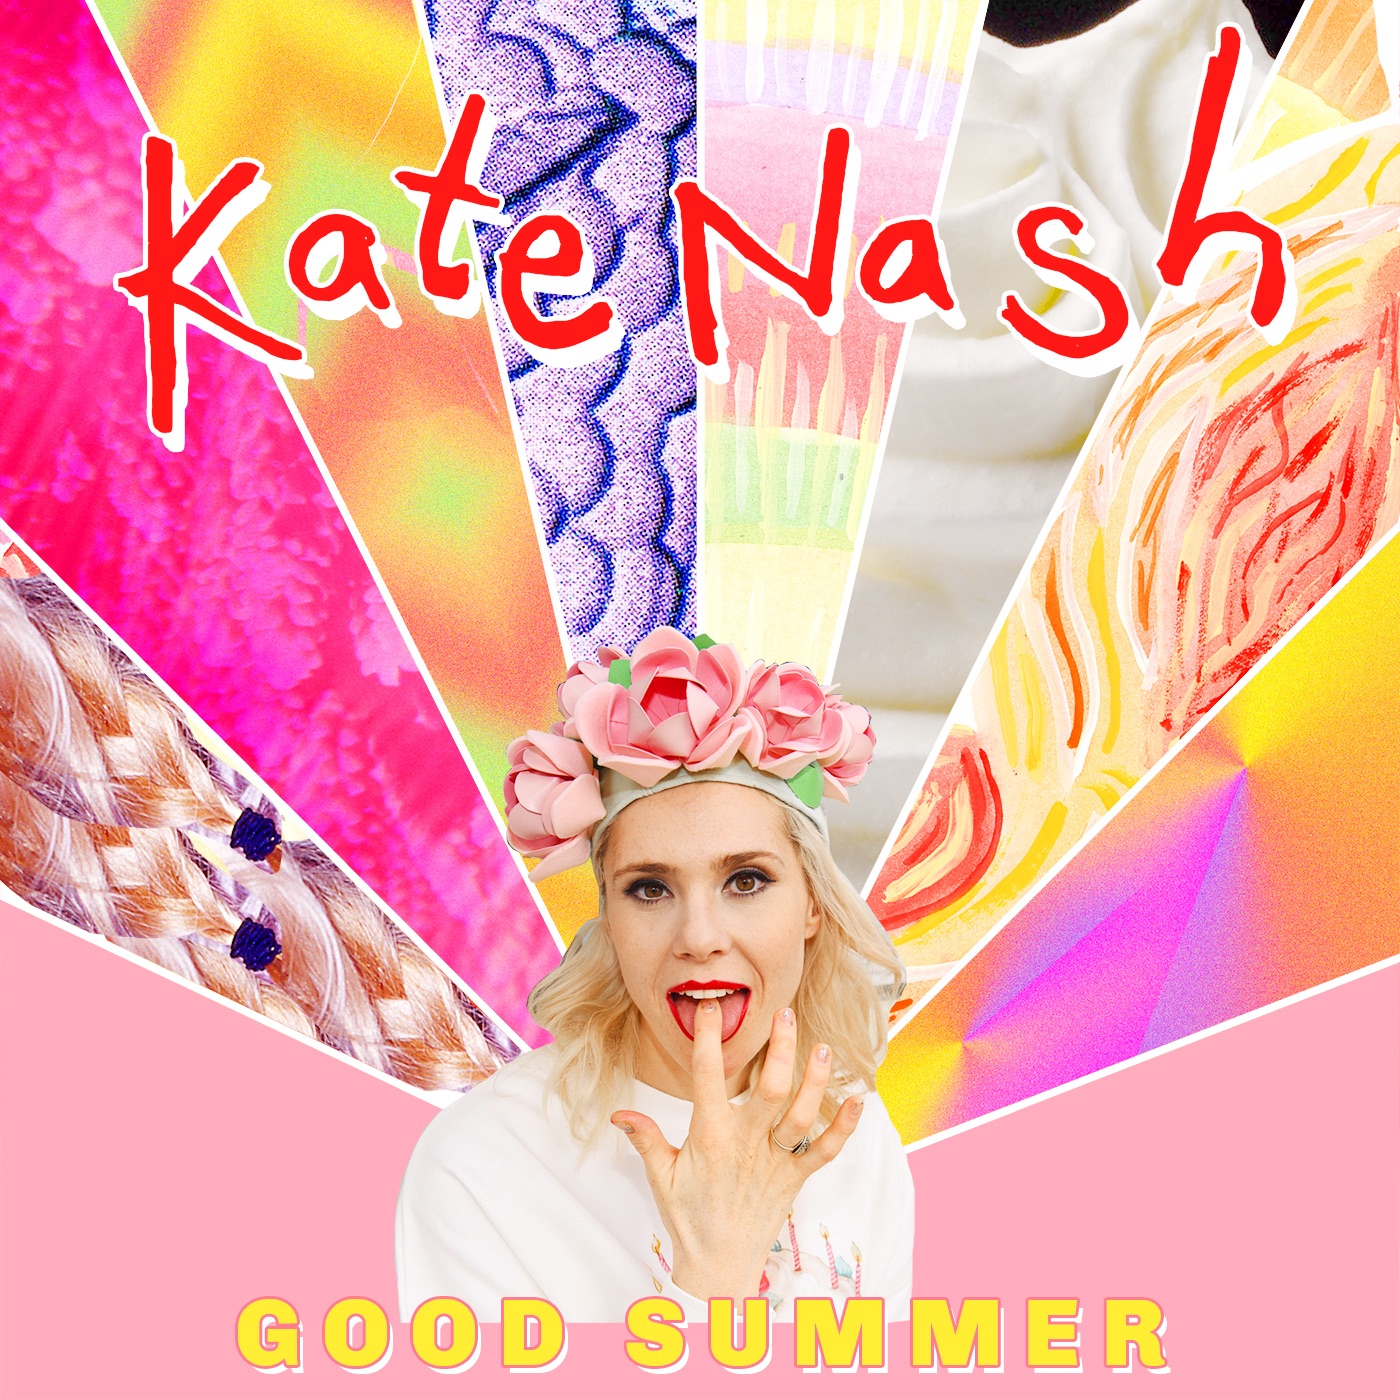 Kate Nash Good Summer cover artwork